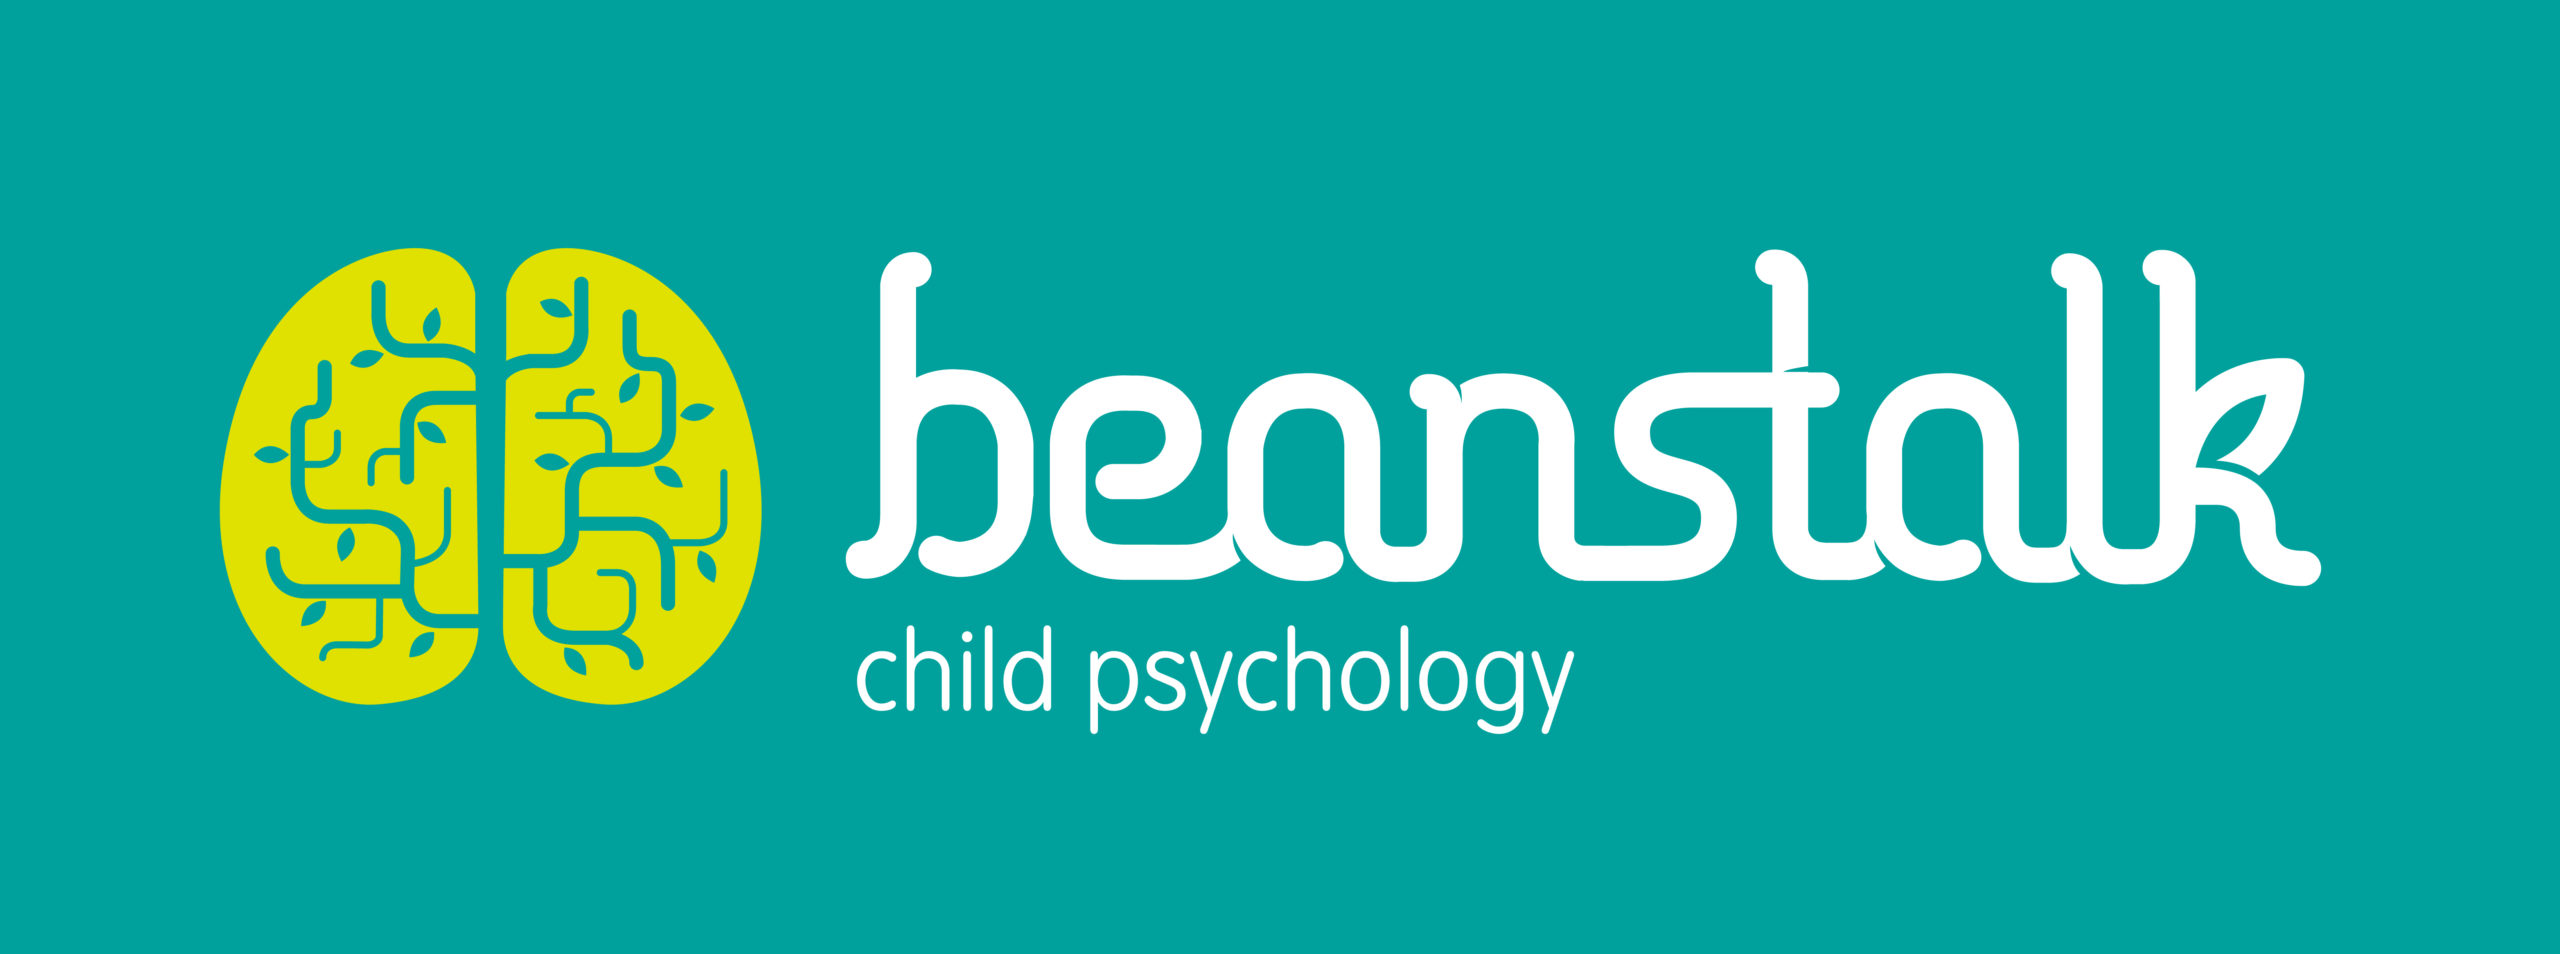 Beanstalk Child Psychology